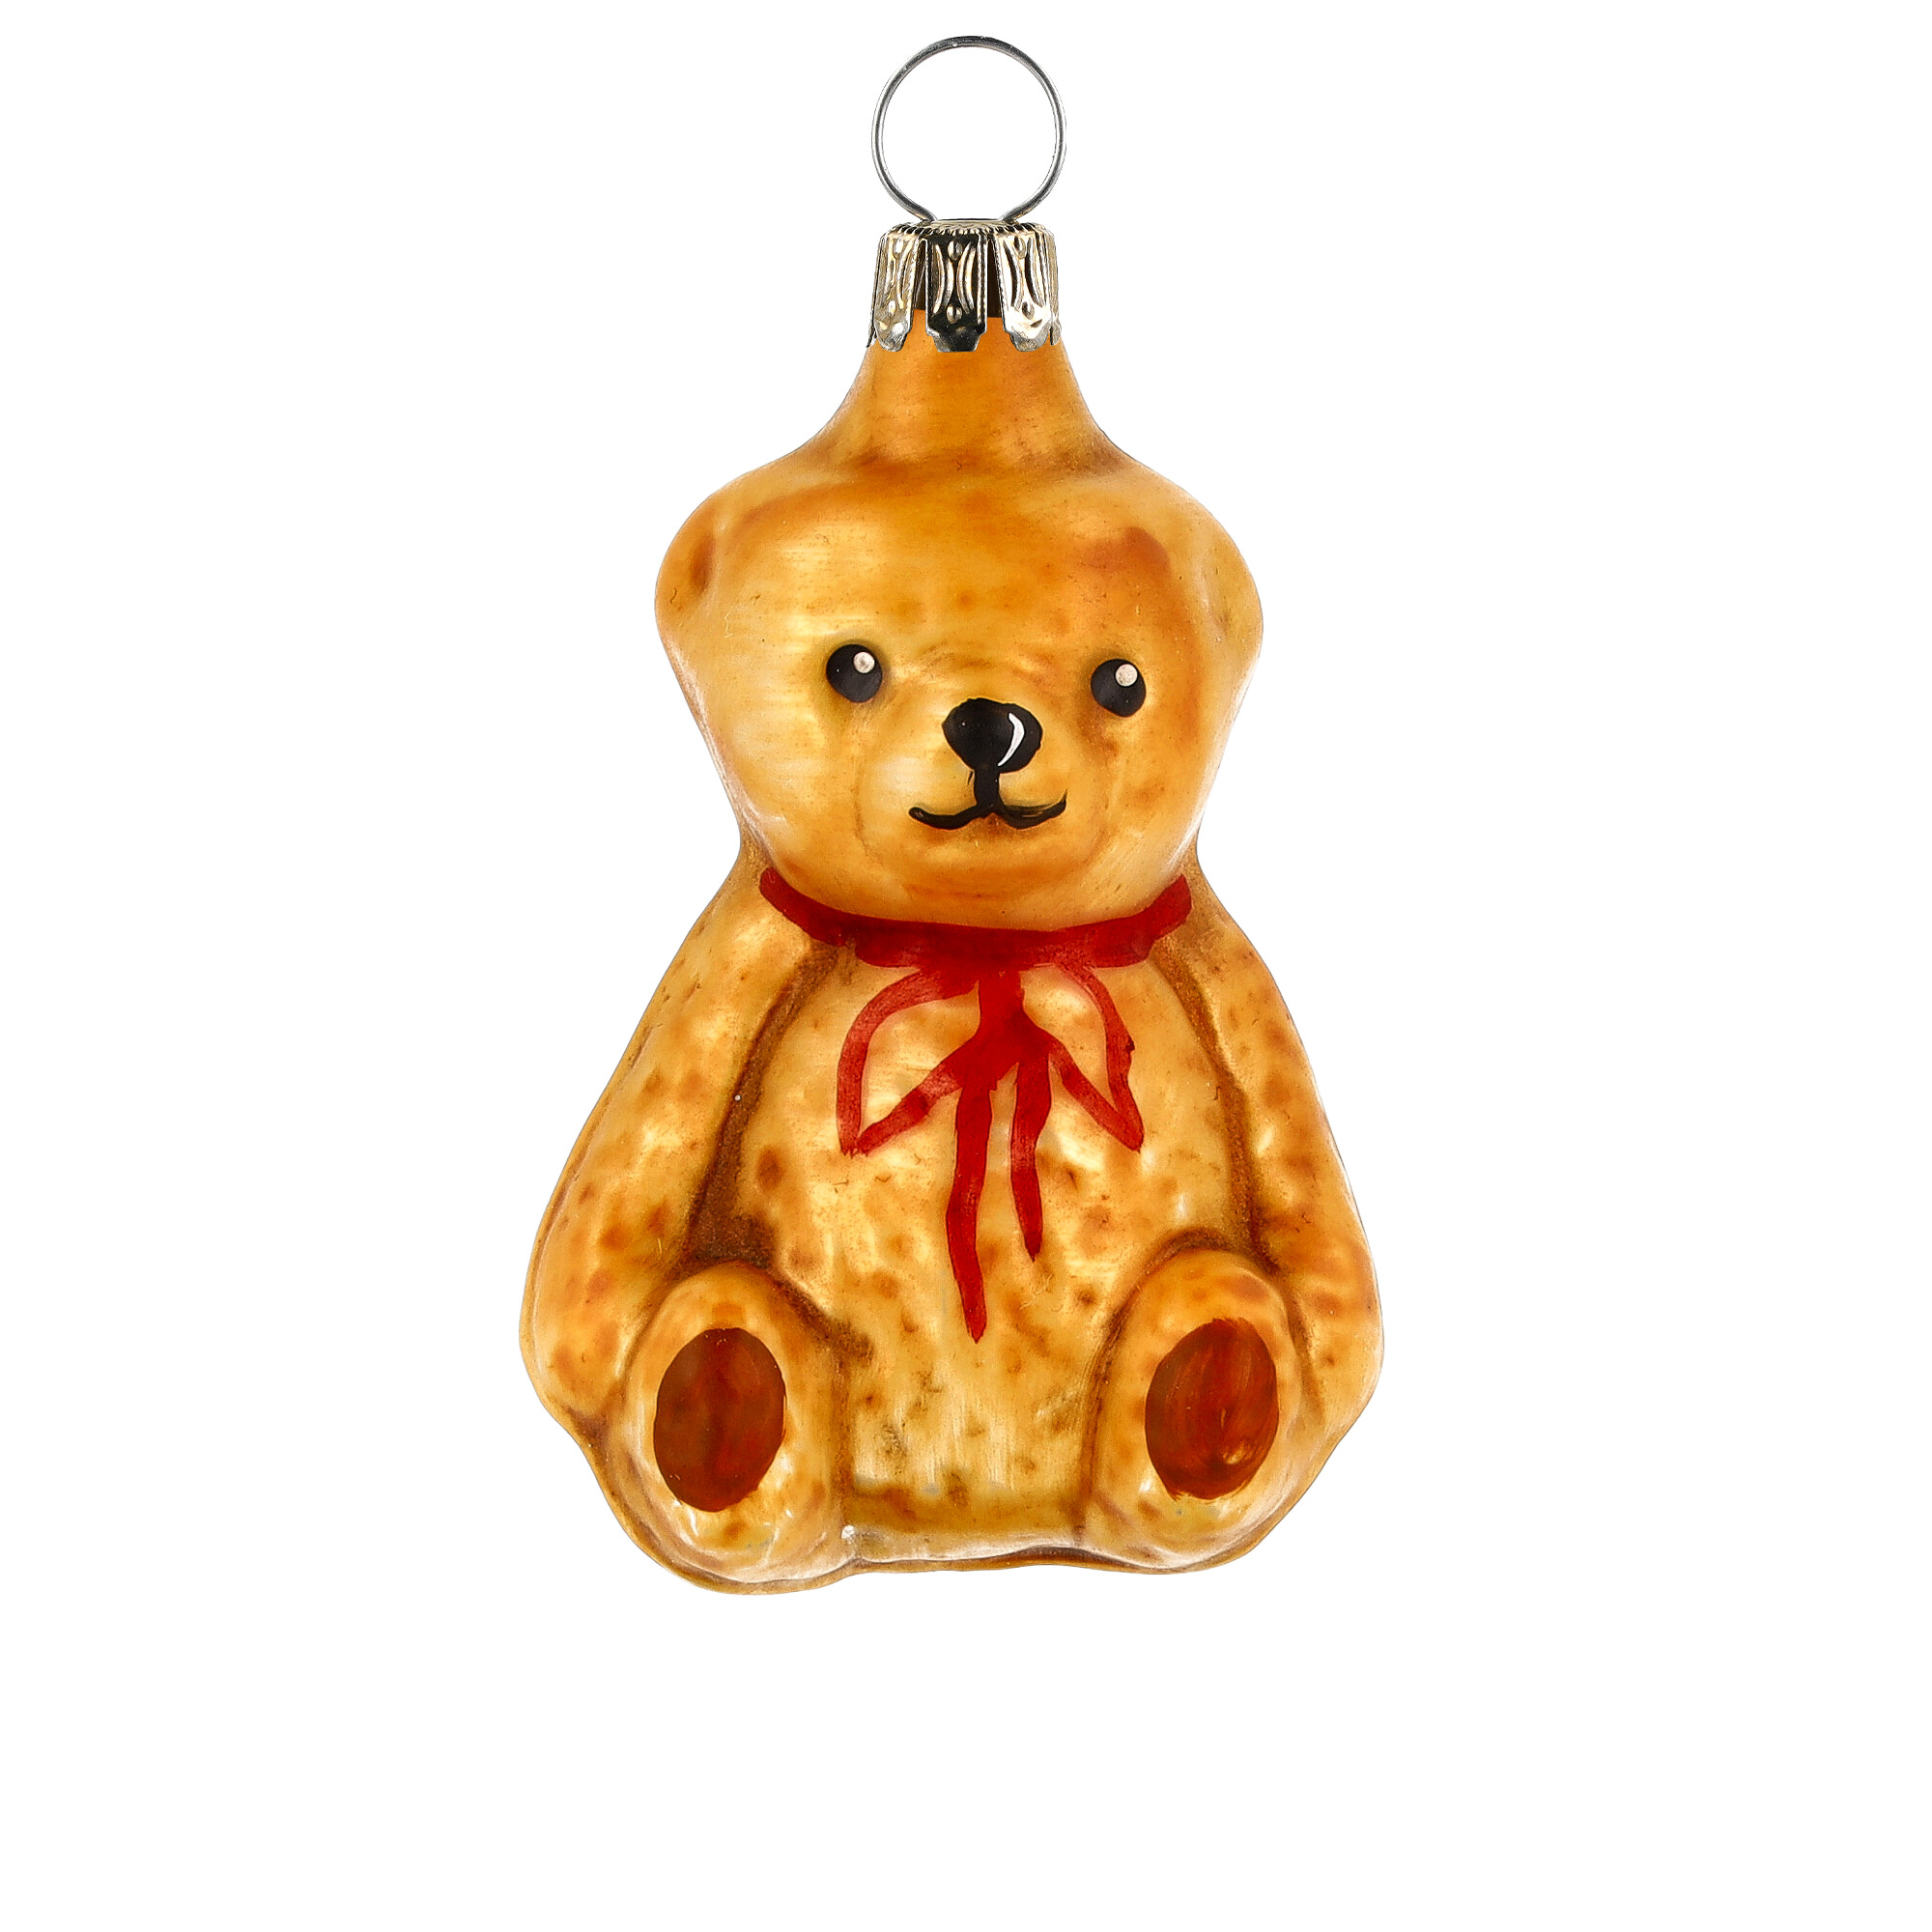 Retro Vintage style Christmas Glass Ornament - Teddybear sitting